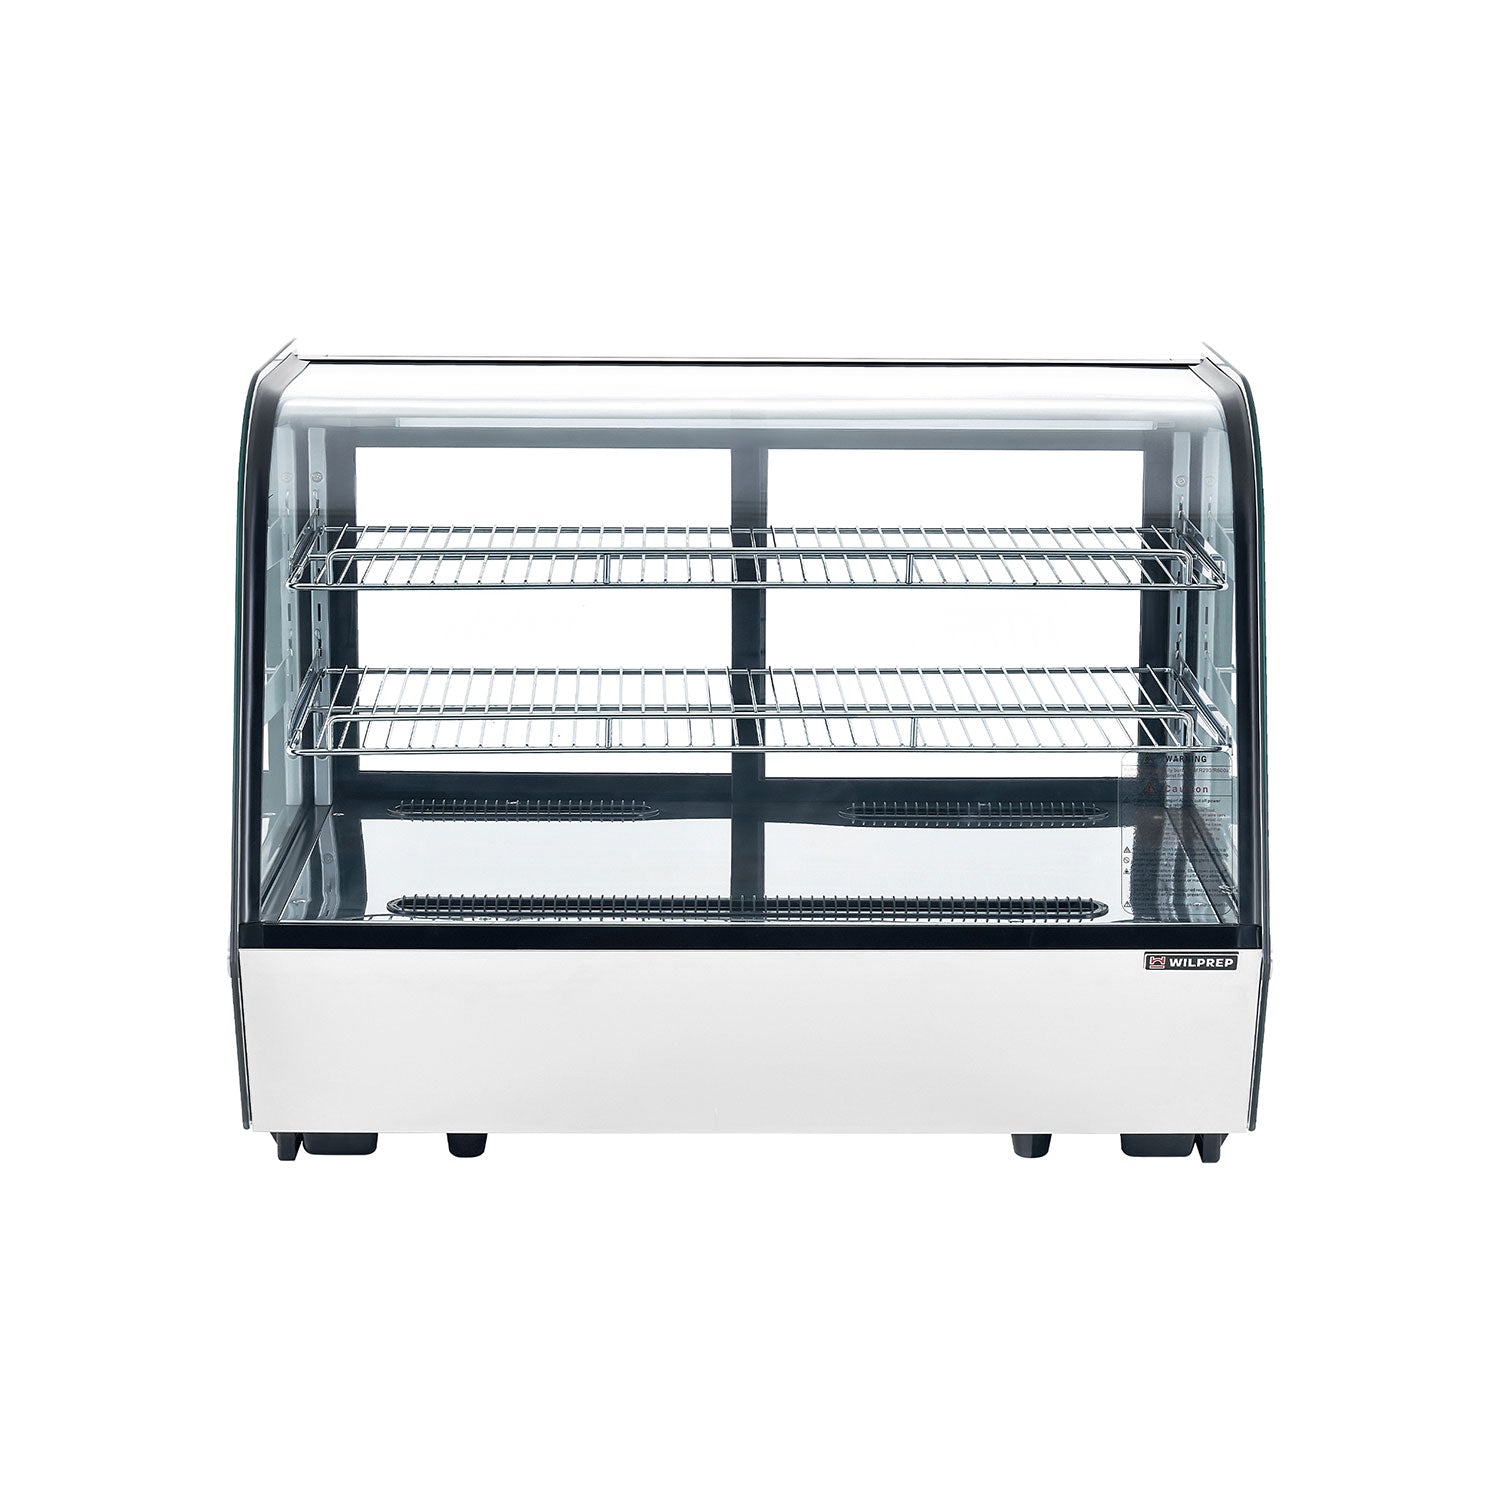 Buy Wilprep 35-inch Countertop Display Refrigerator for Sale